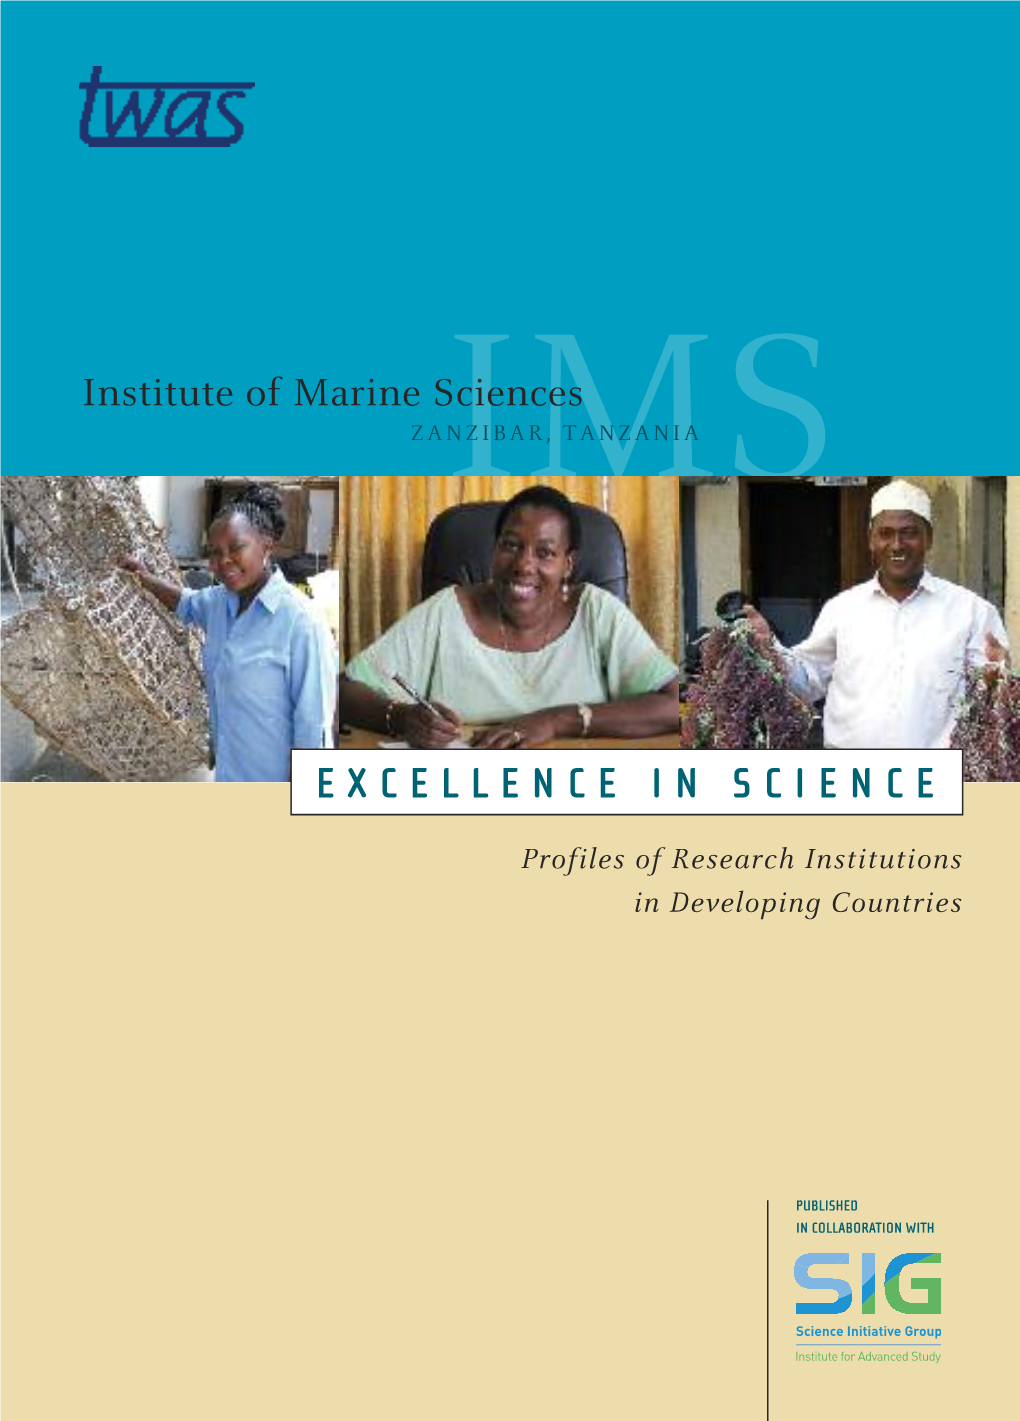 Institute of Marine Sciences, Zanzibar, Tanzania